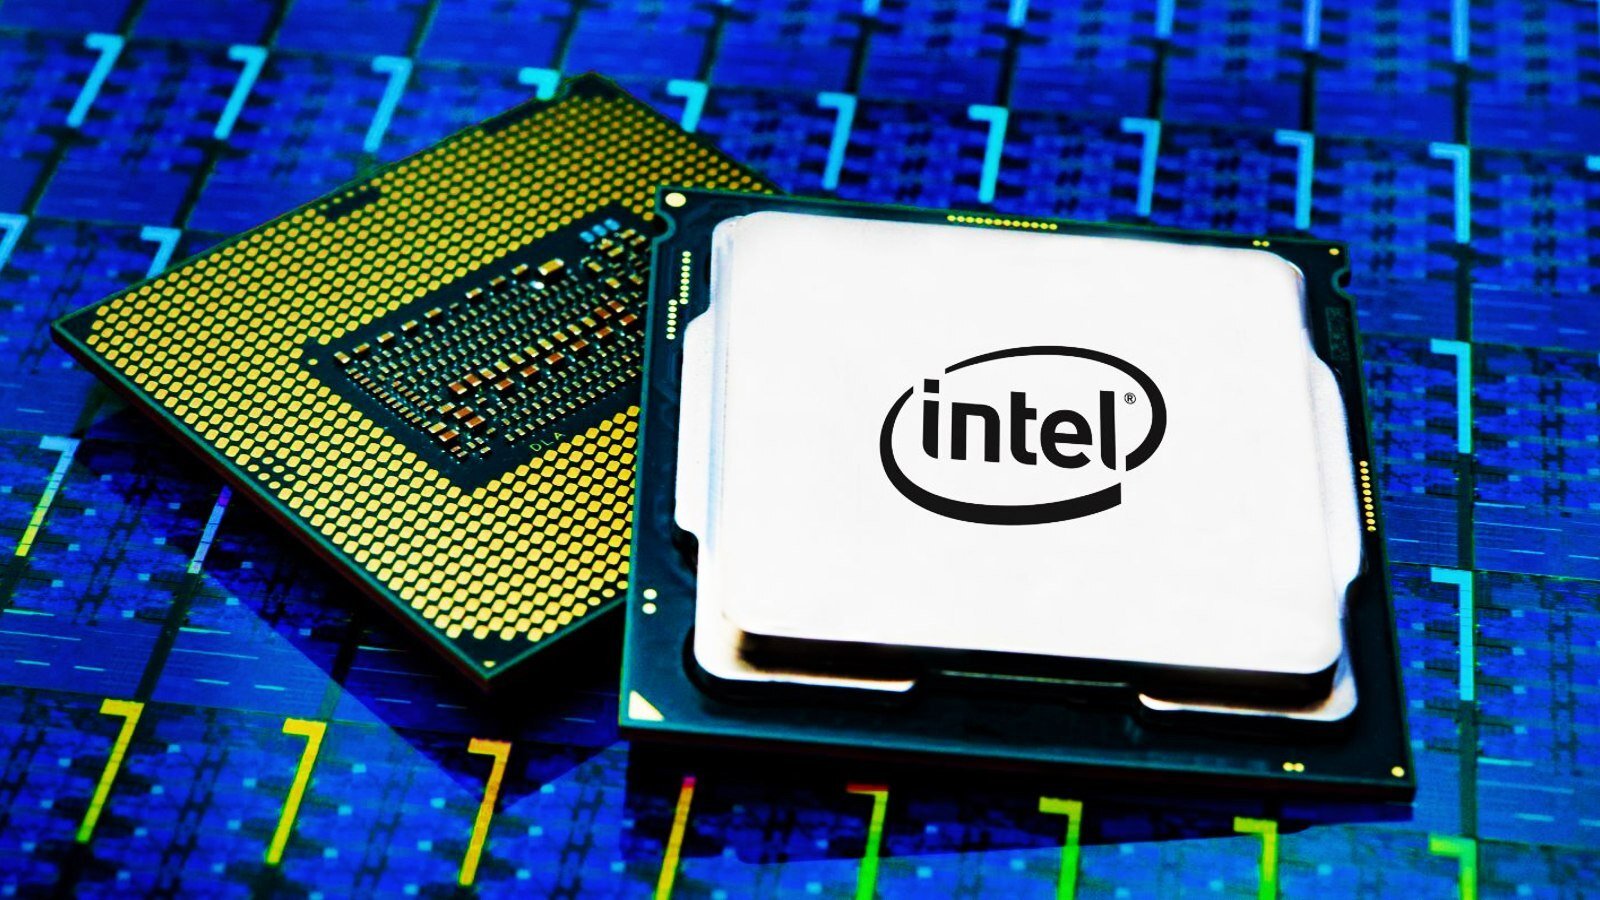 New Downfall attacks on Intel CPUs steal encryption keys, data – Source: www.bleepingcomputer.com